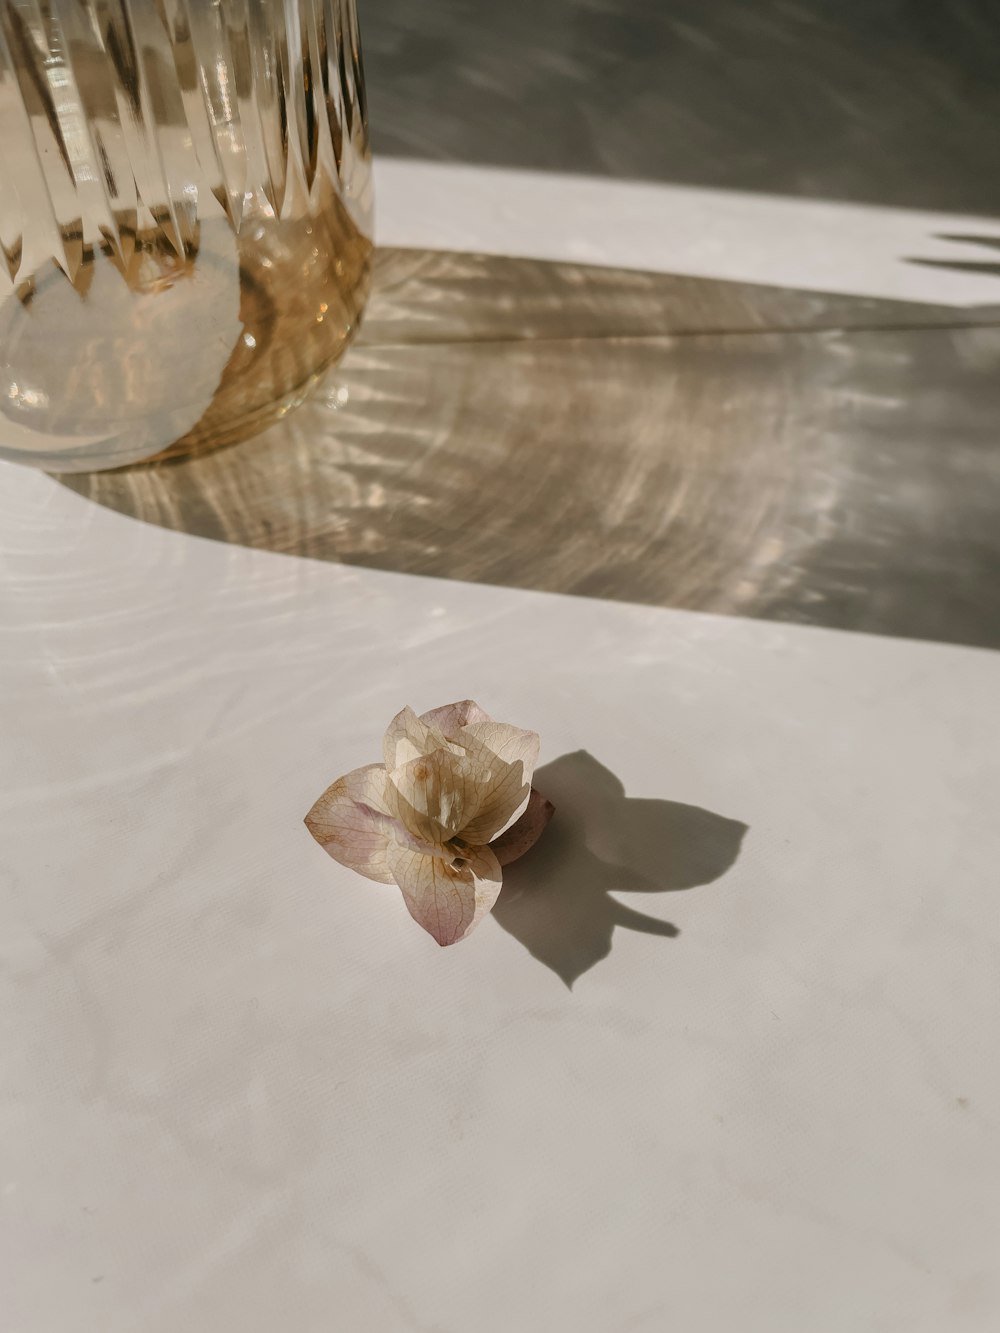 a flower on a table